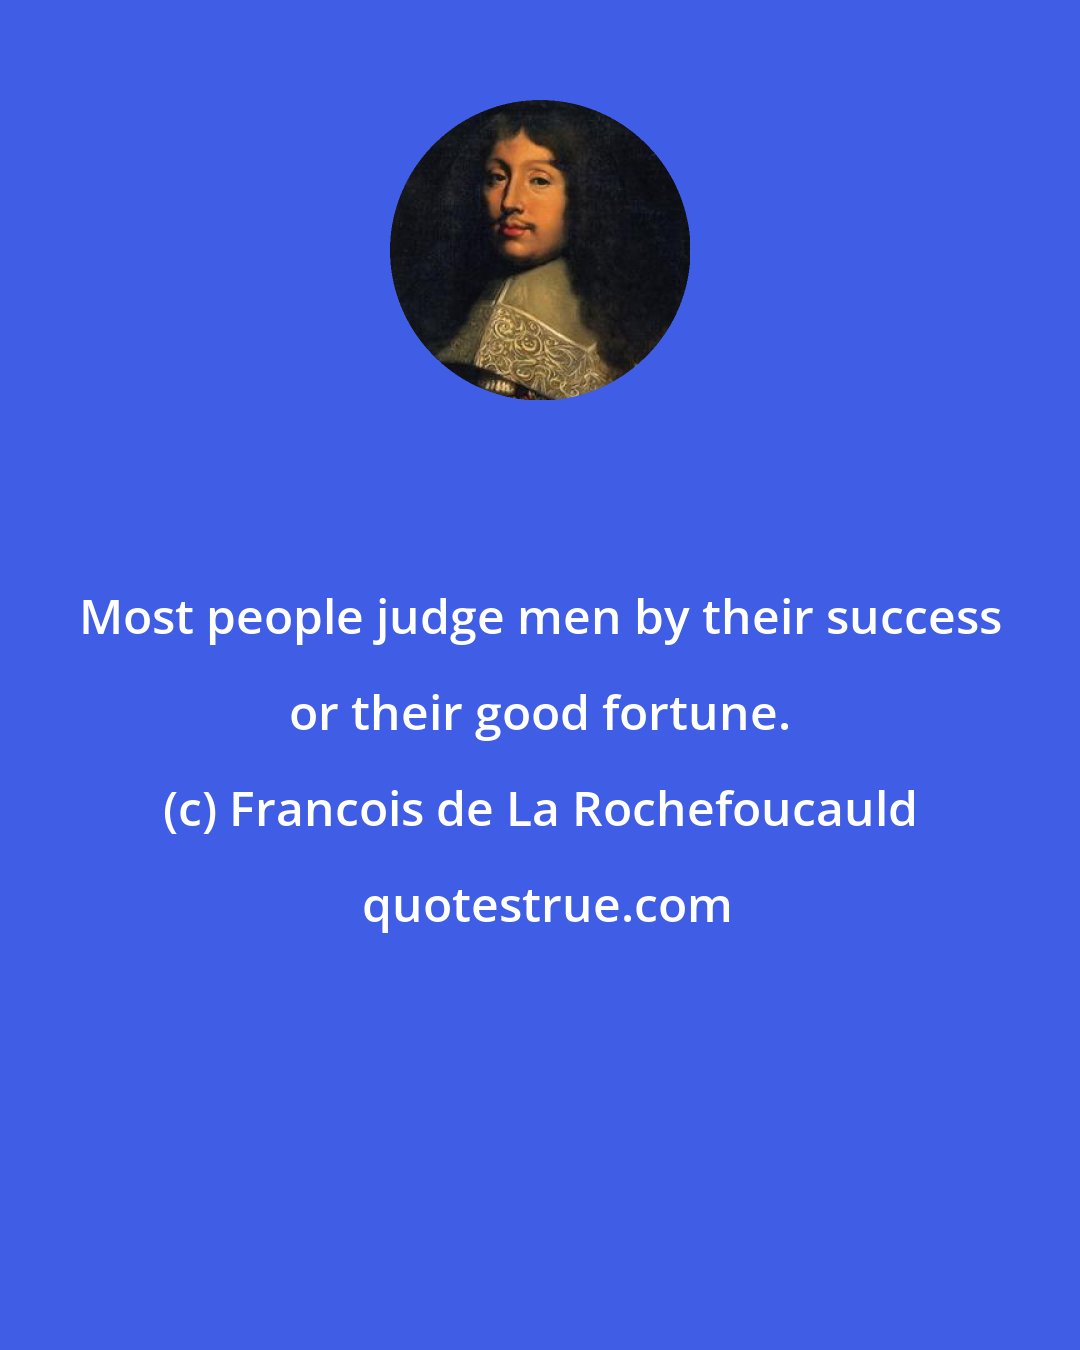 Francois de La Rochefoucauld: Most people judge men by their success or their good fortune.